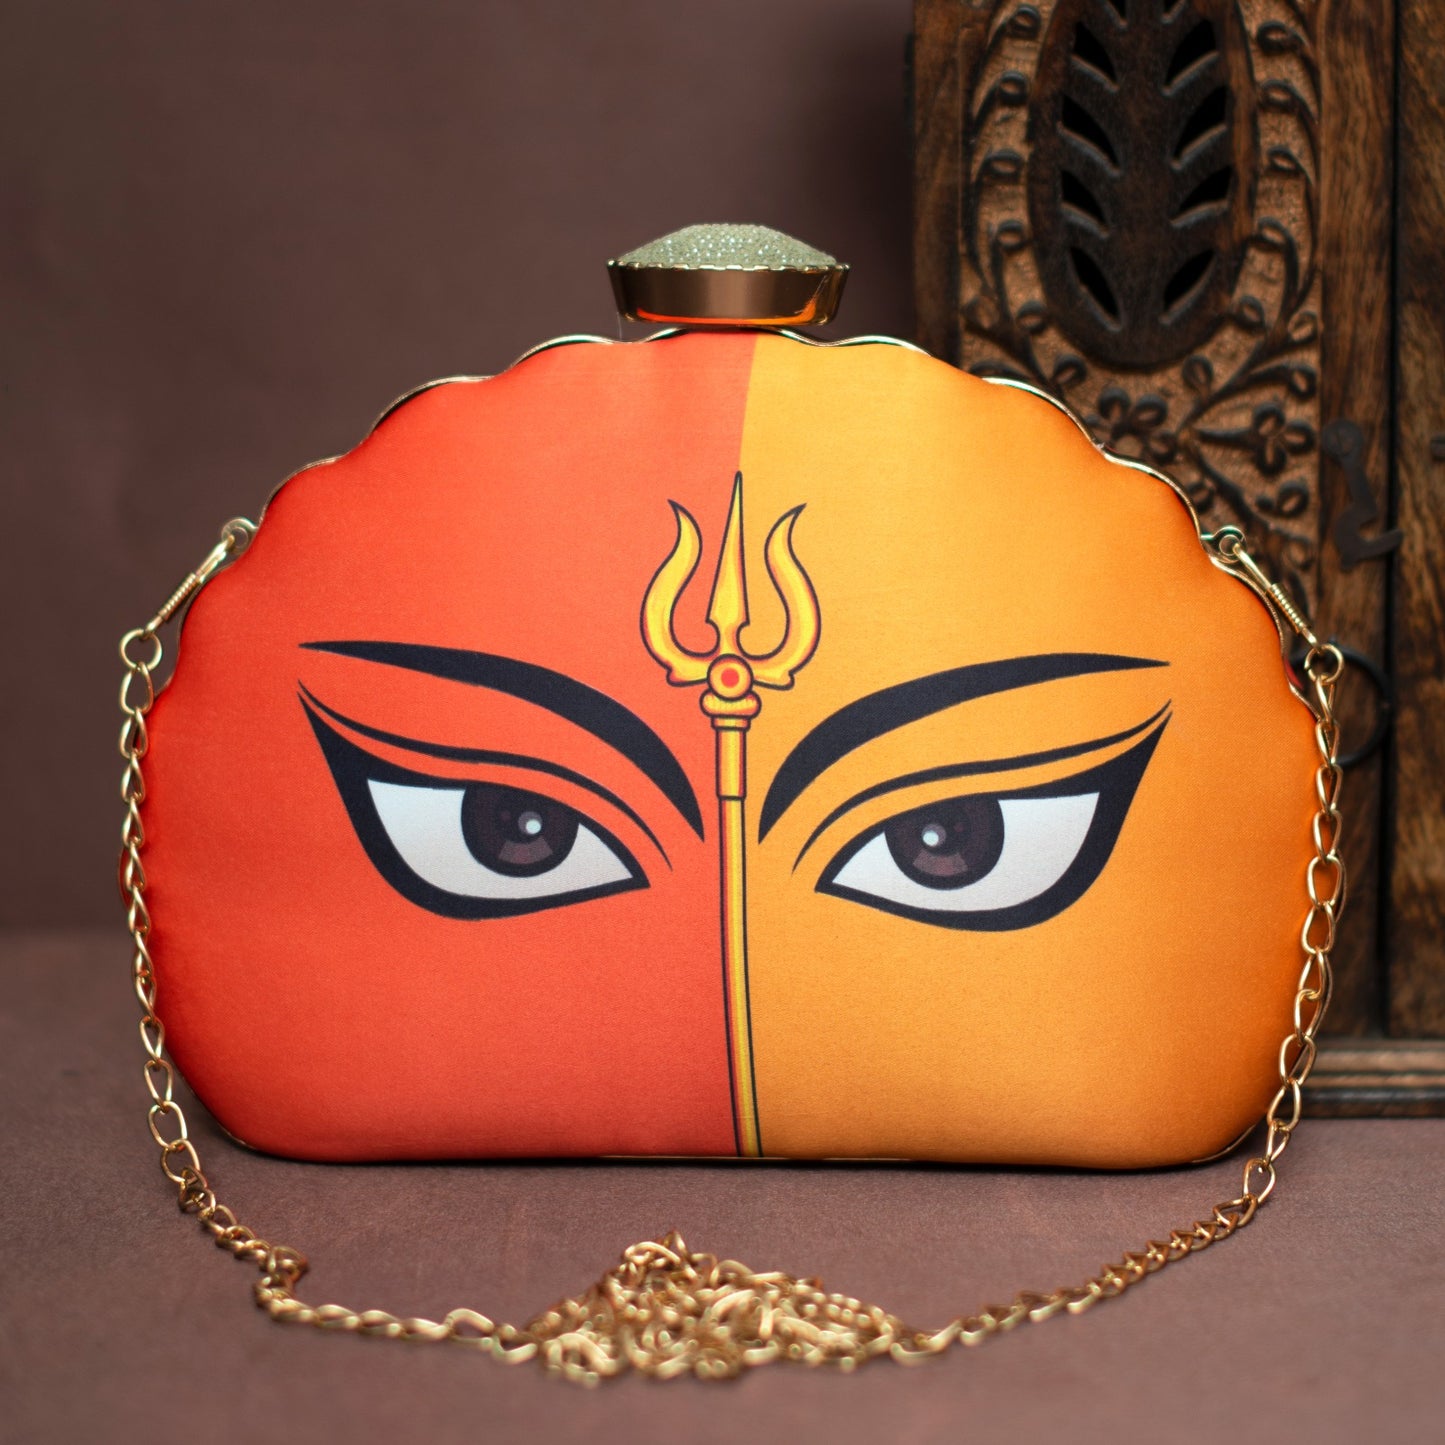 Navratri | Durga Puja Special Clutch